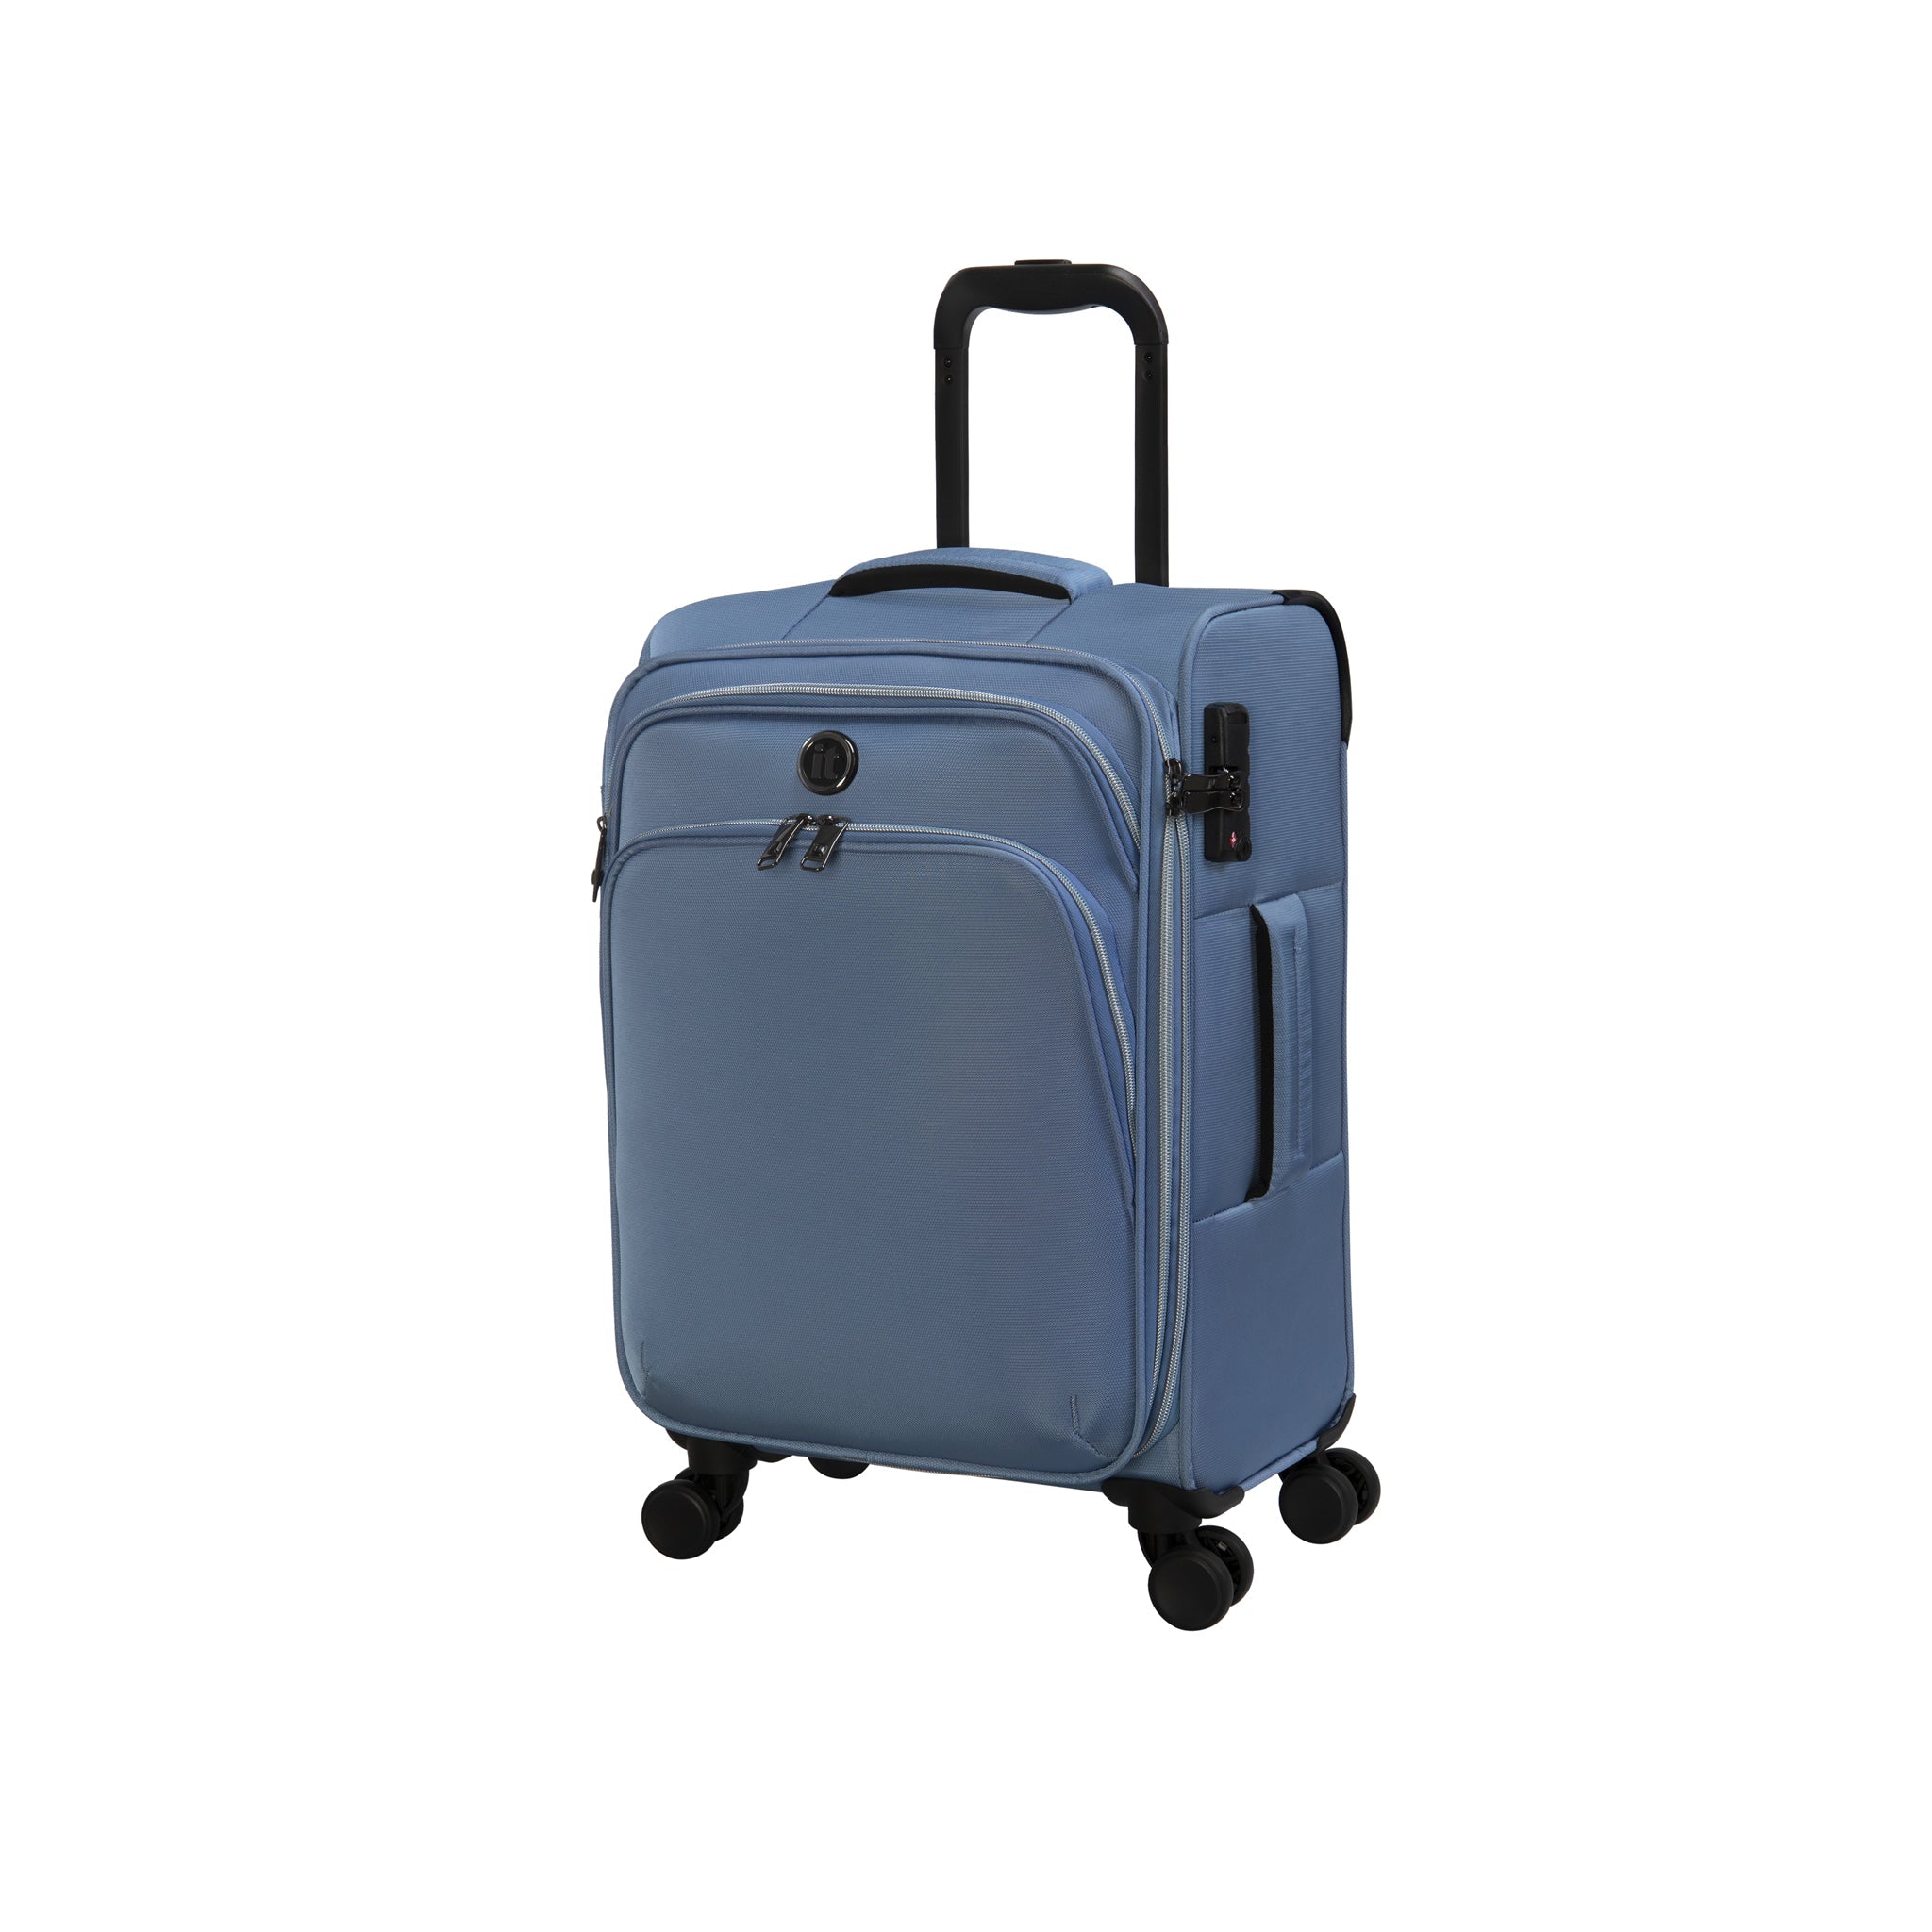 Leichte Koffer-Trolleys - it Luggage